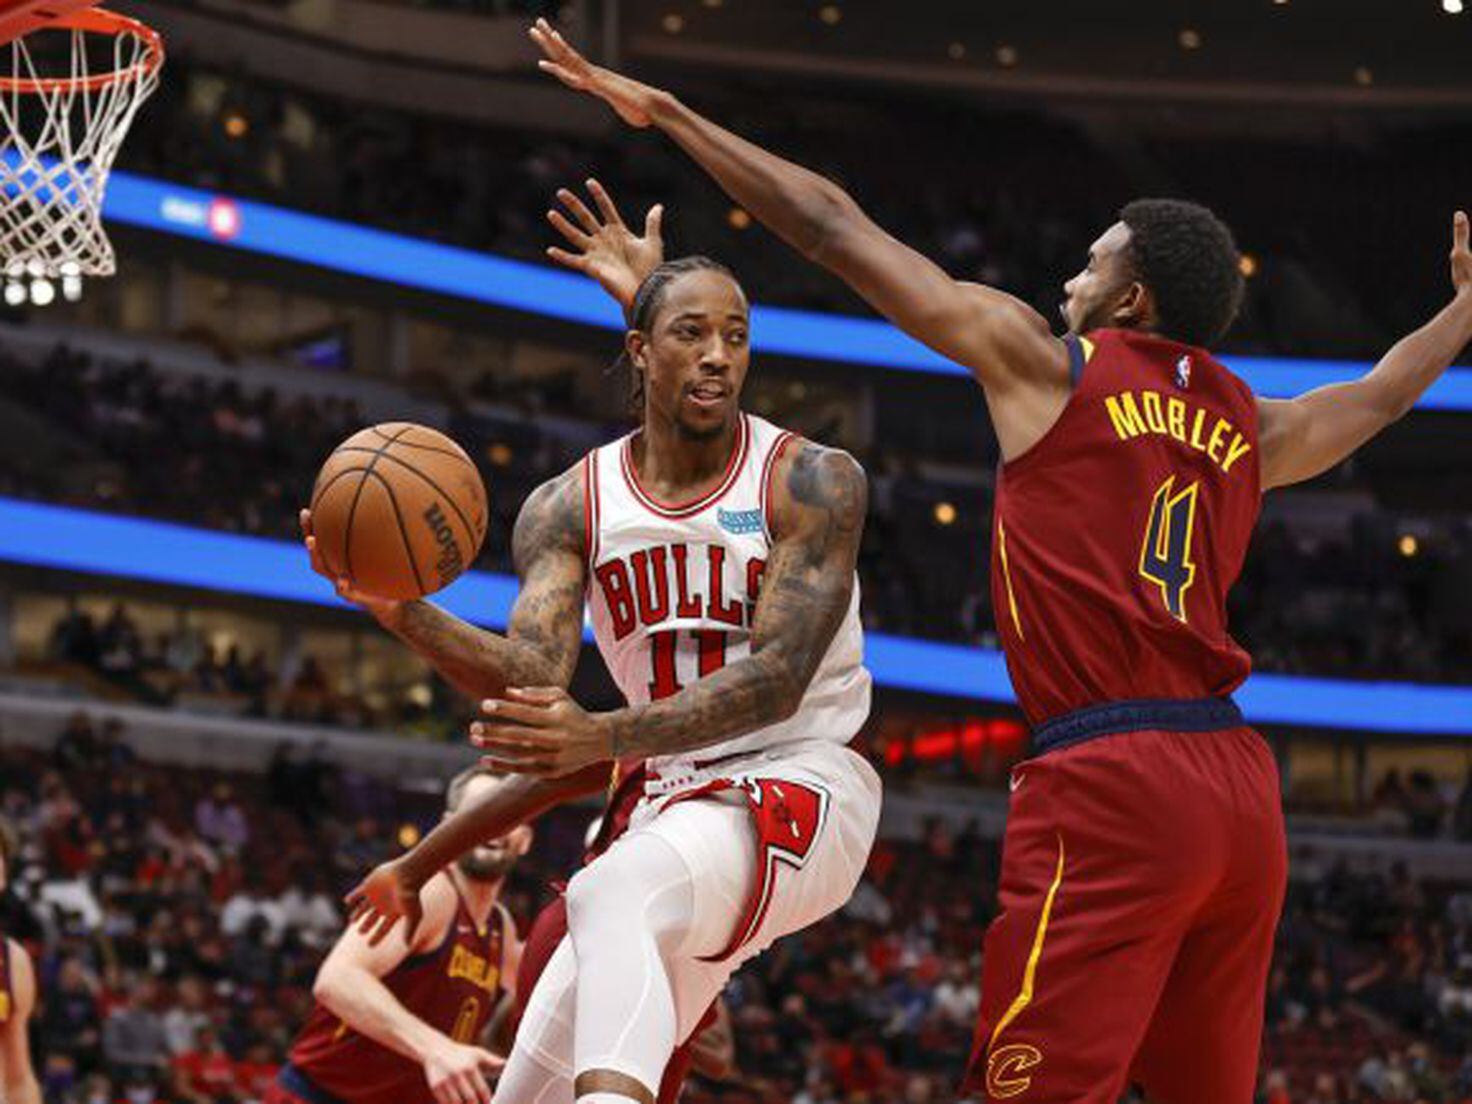 Bulls take Rose with No. 1 pick in NBA Draft